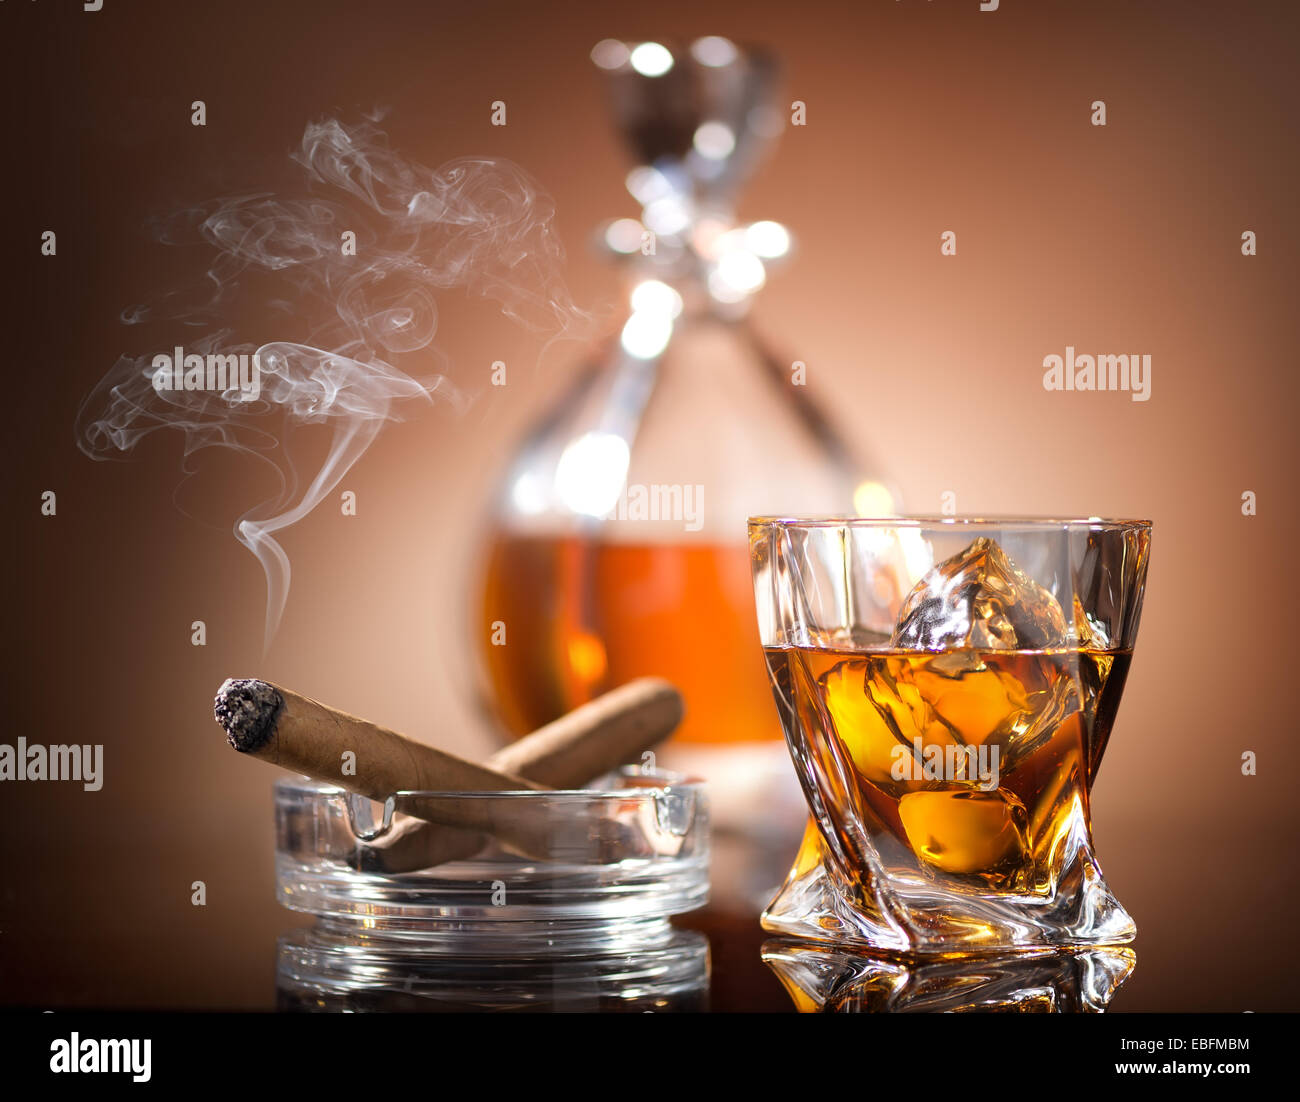 https://c8.alamy.com/comp/EBFMBM/glass-of-whiskey-and-a-cigar-in-vintage-style-EBFMBM.jpg